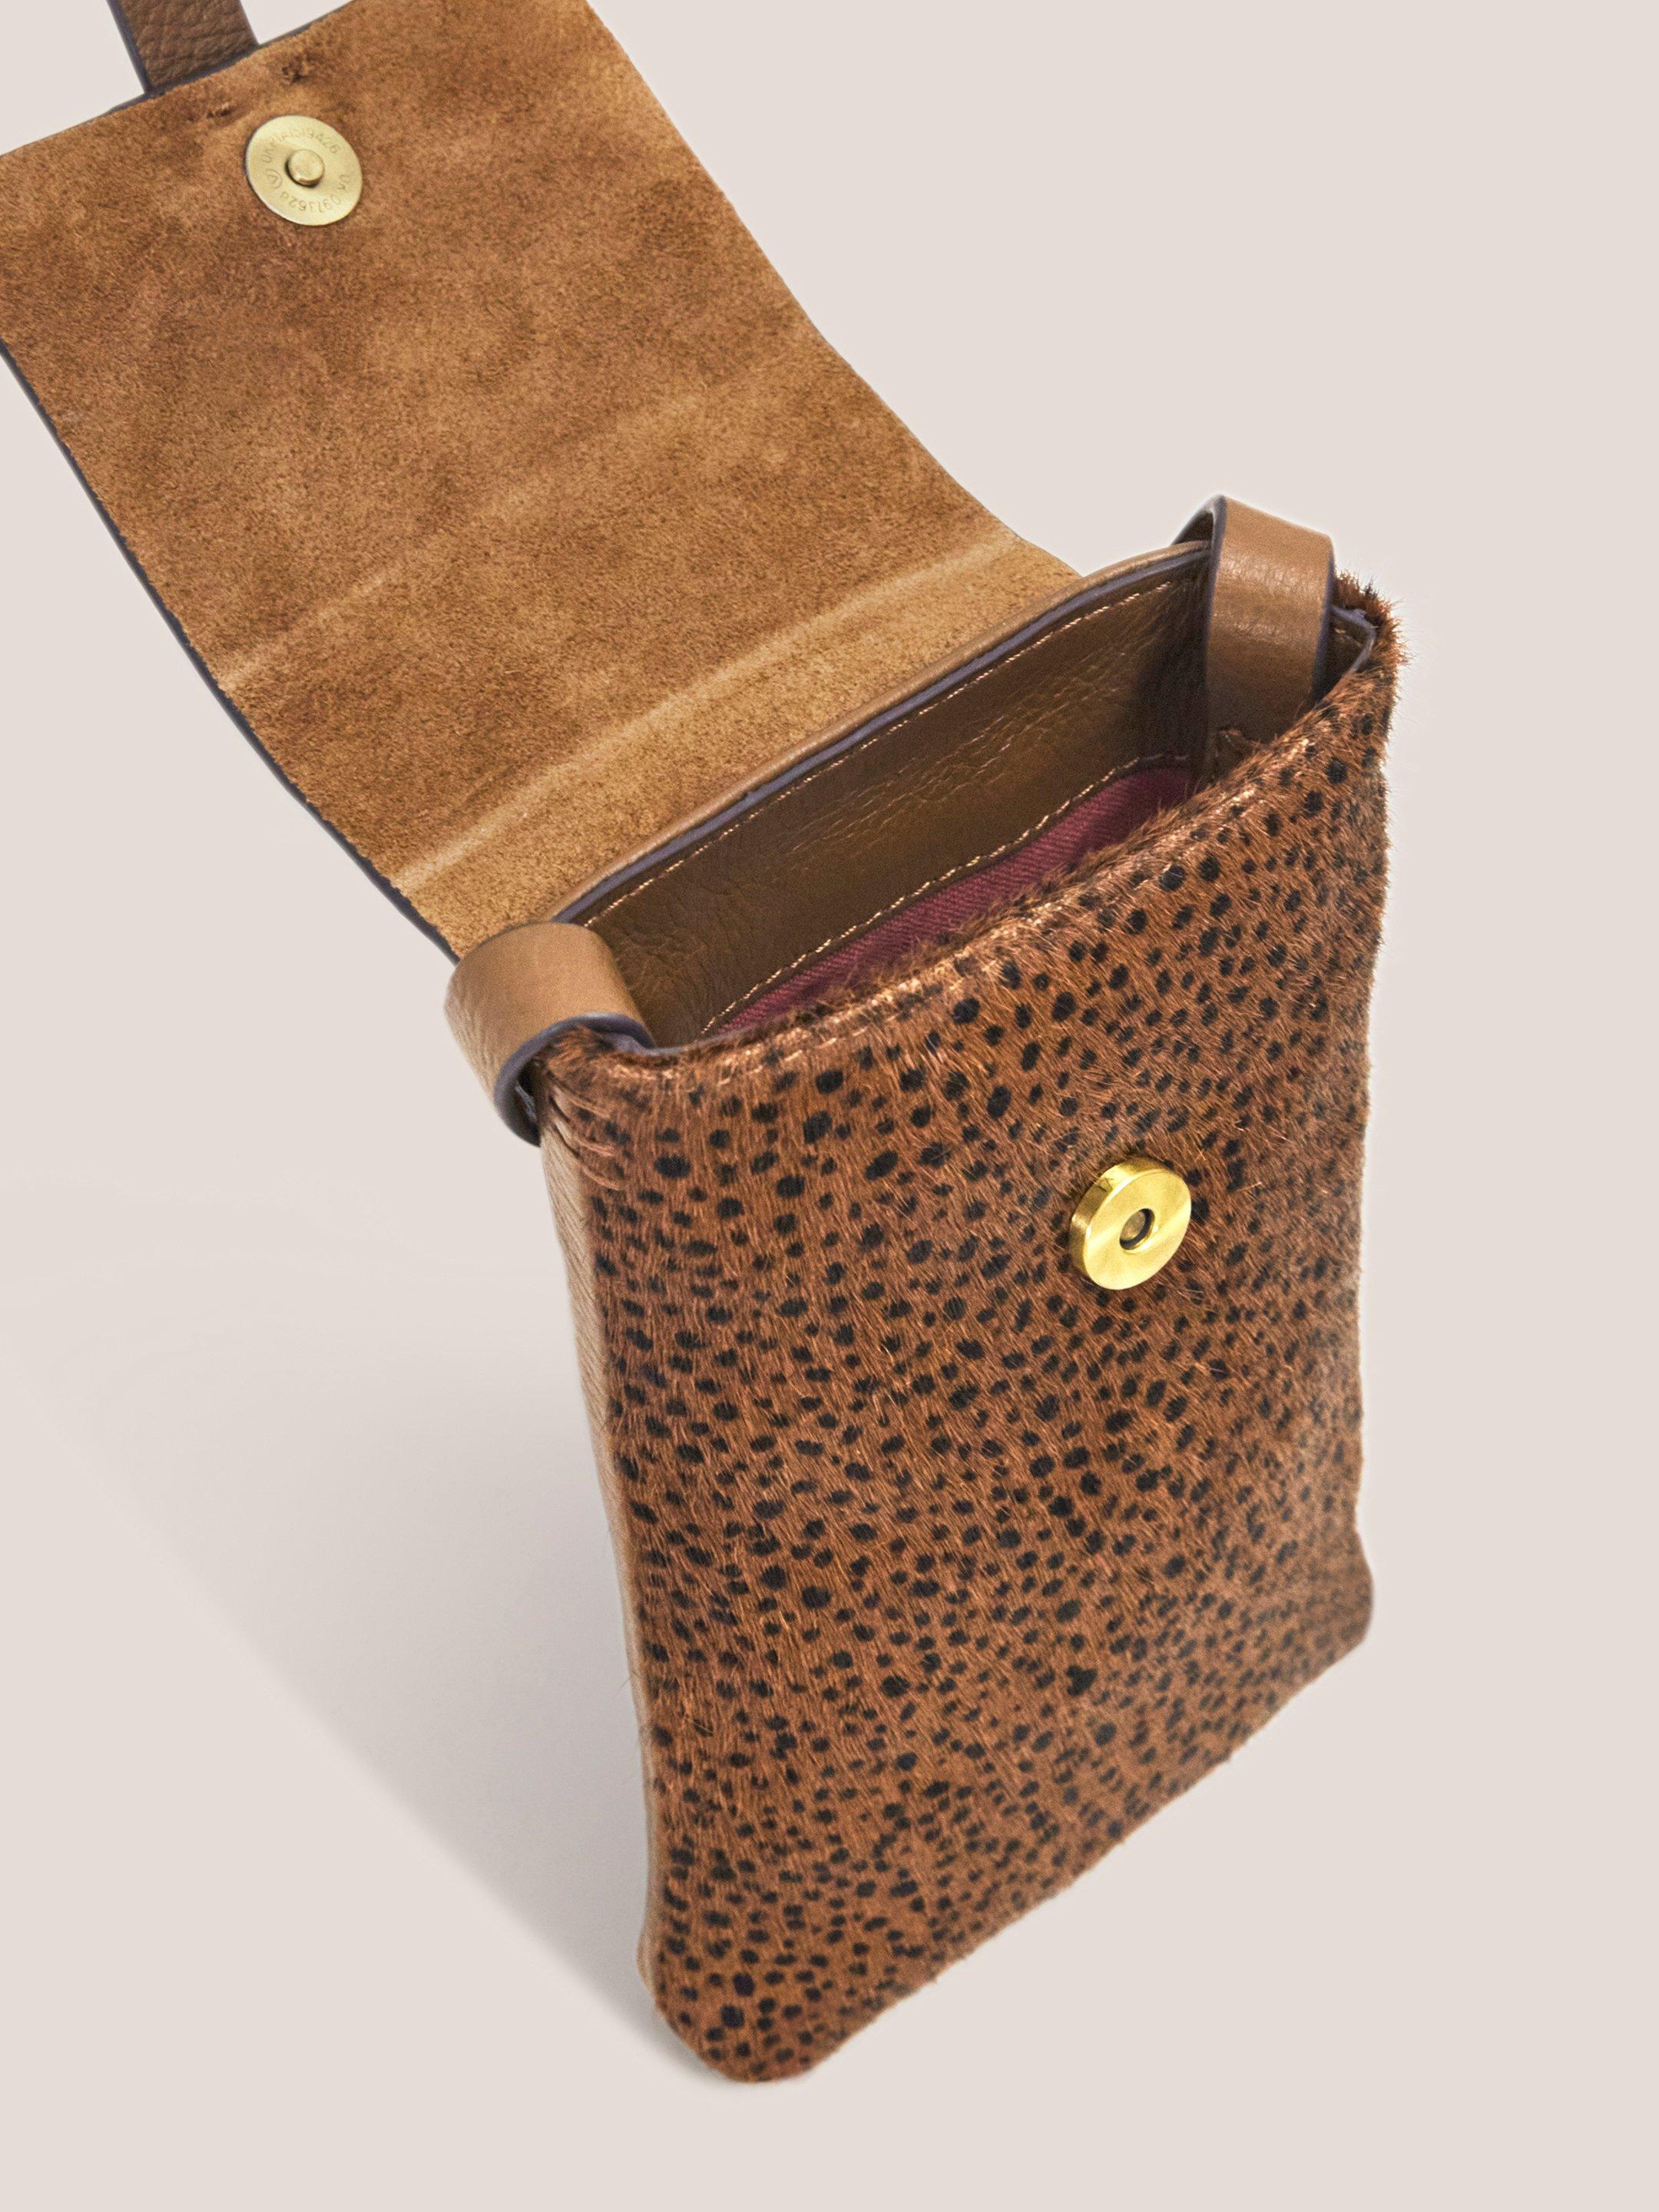 Clara Buckle Leather Phone Bag in TAN PR - FLAT FRONT